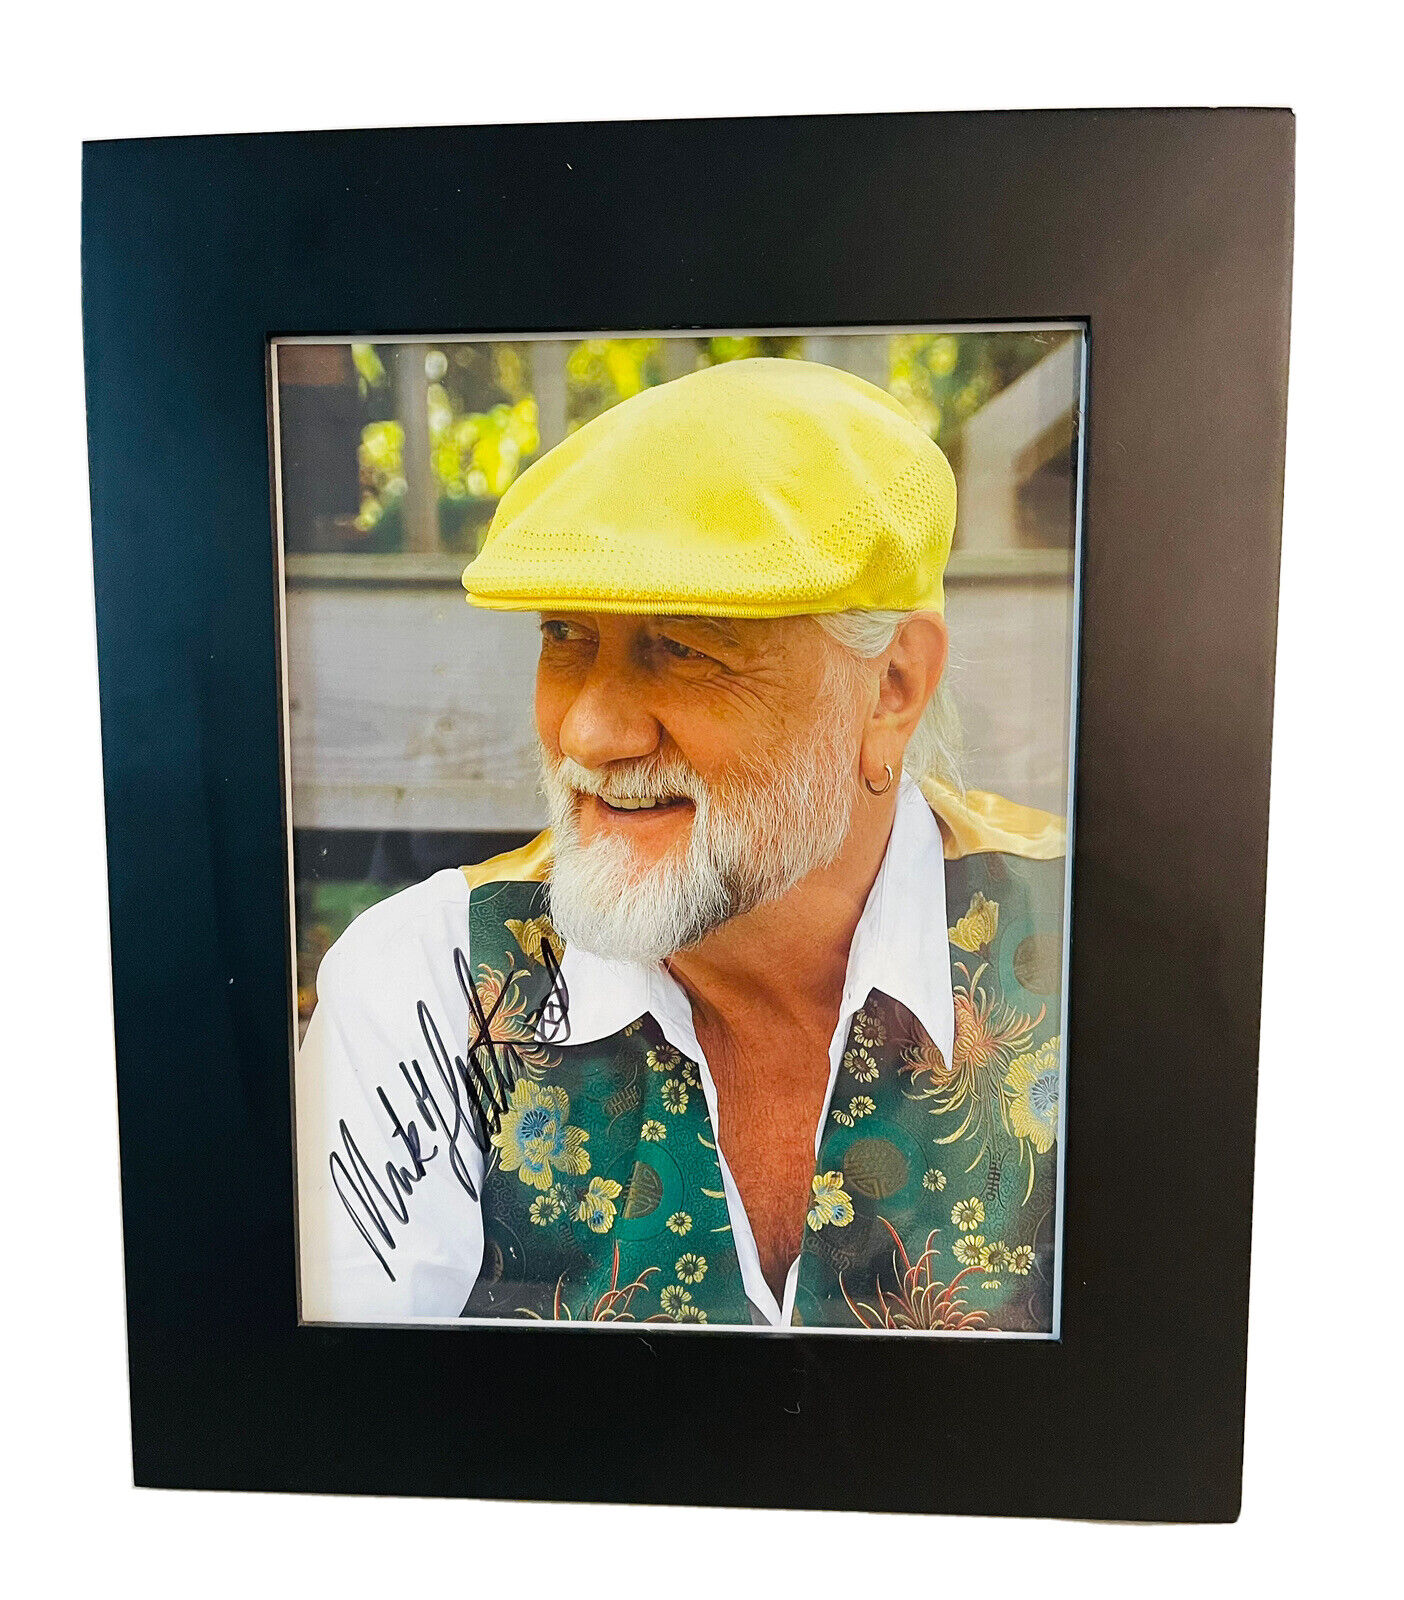 Mick Fleetwood of Fleetwood Mac - Autographed Photo in 8x10 Frame